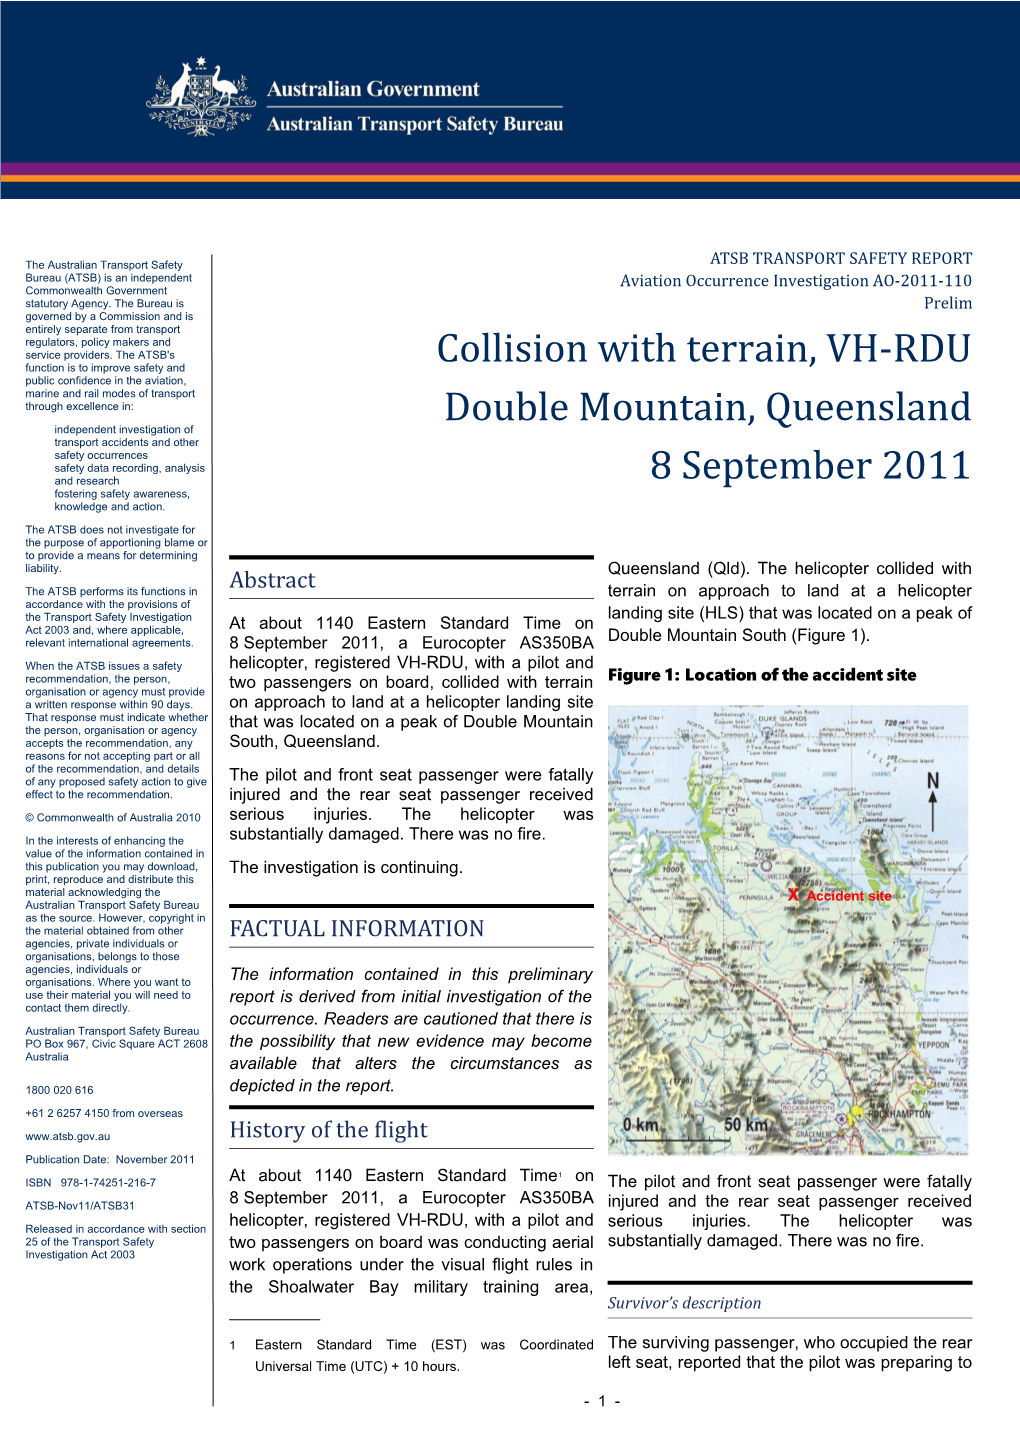 Collision with Terrain, VH-RDU Double Mountain, Queensland 8 September 2011